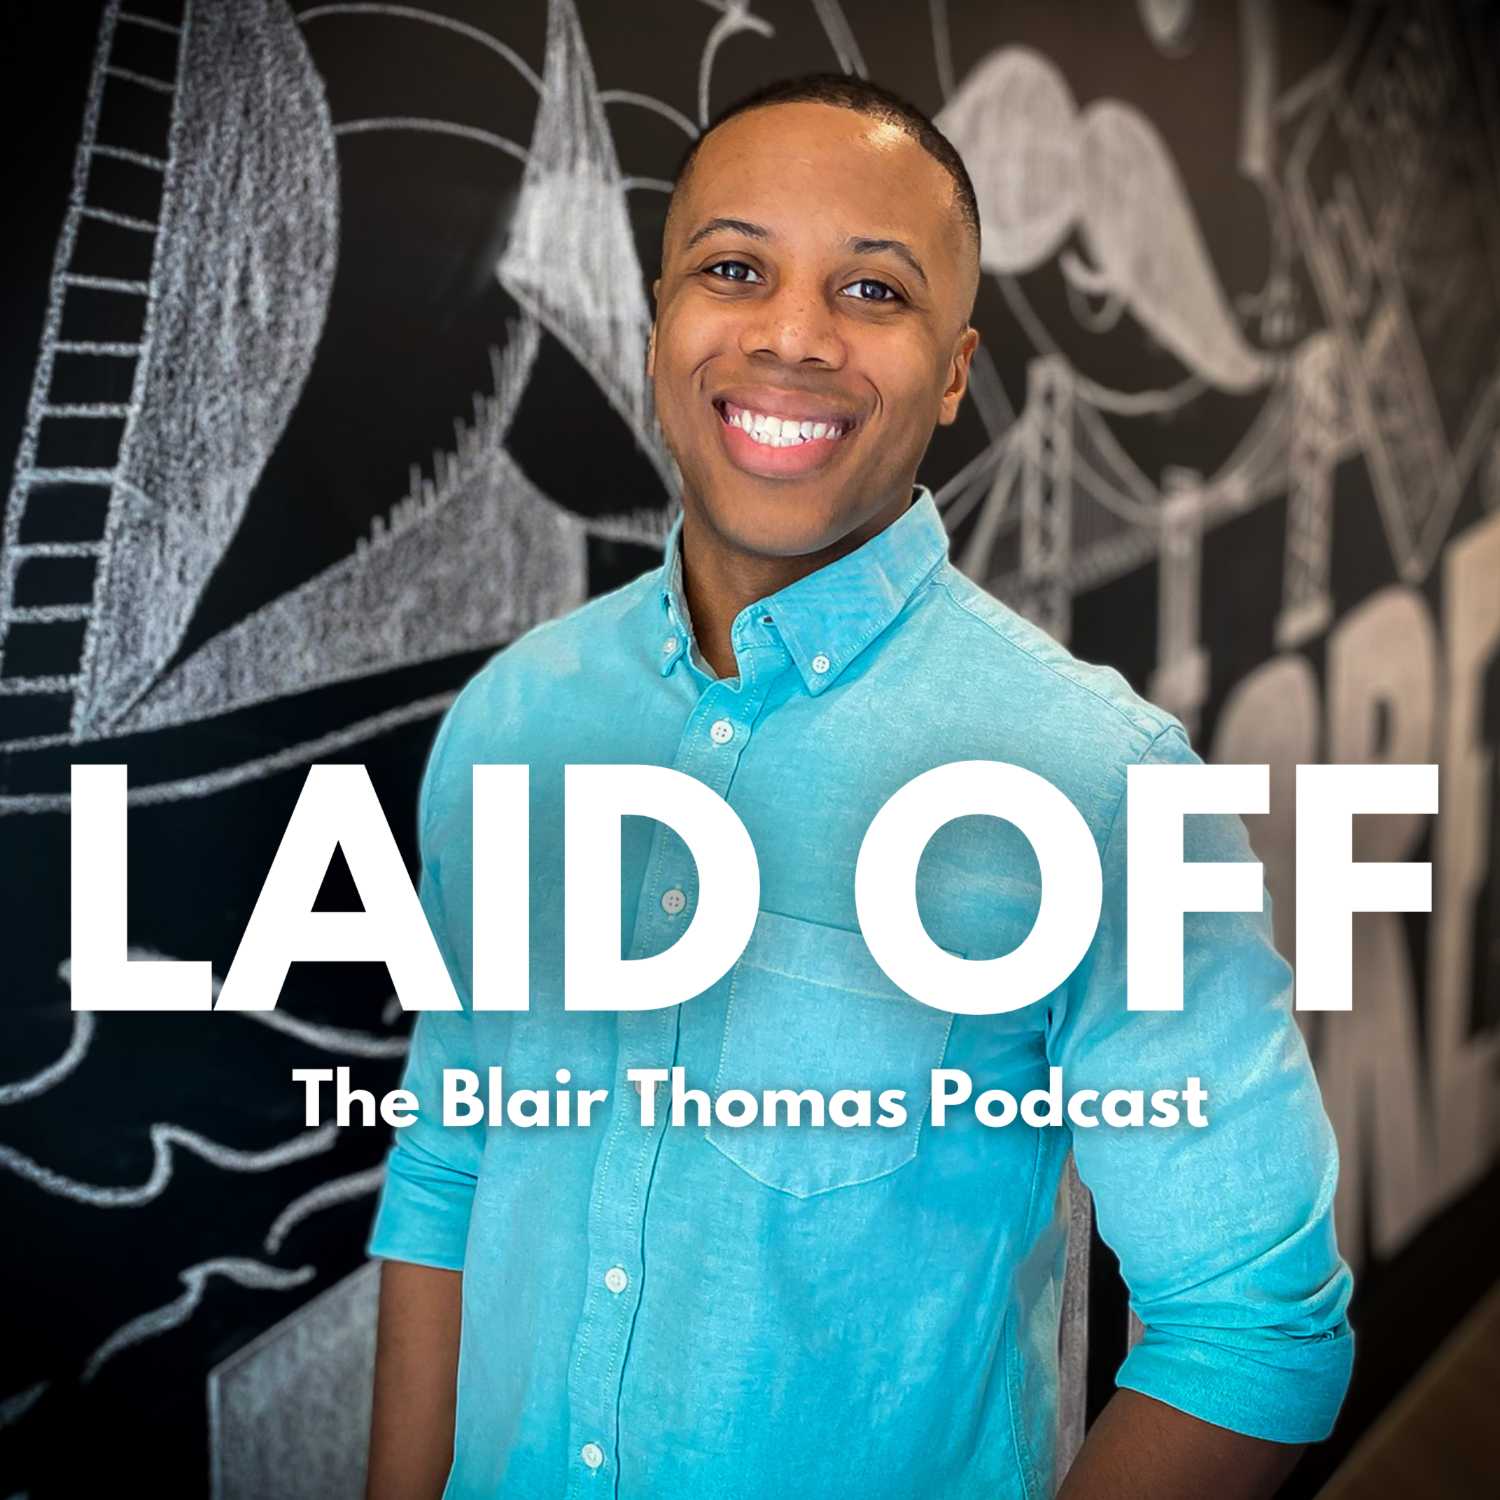 Laid Off: The Blair Thomas Podcast